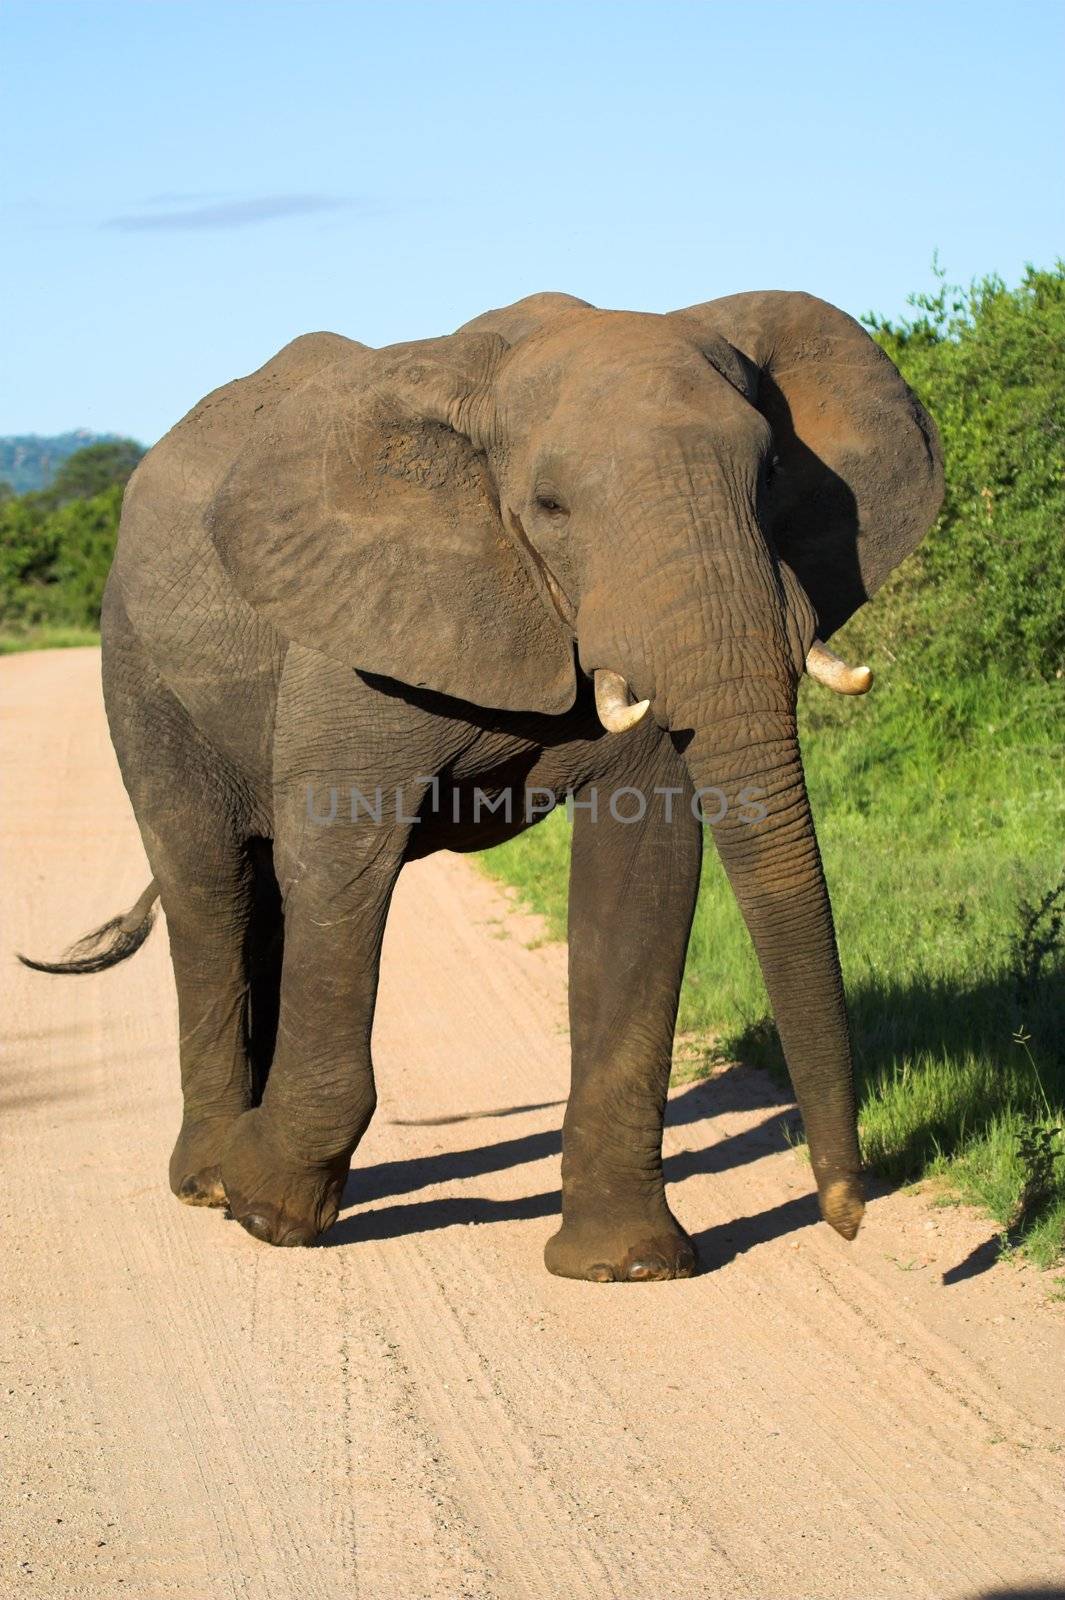 Elephant bull elephant walking down the road